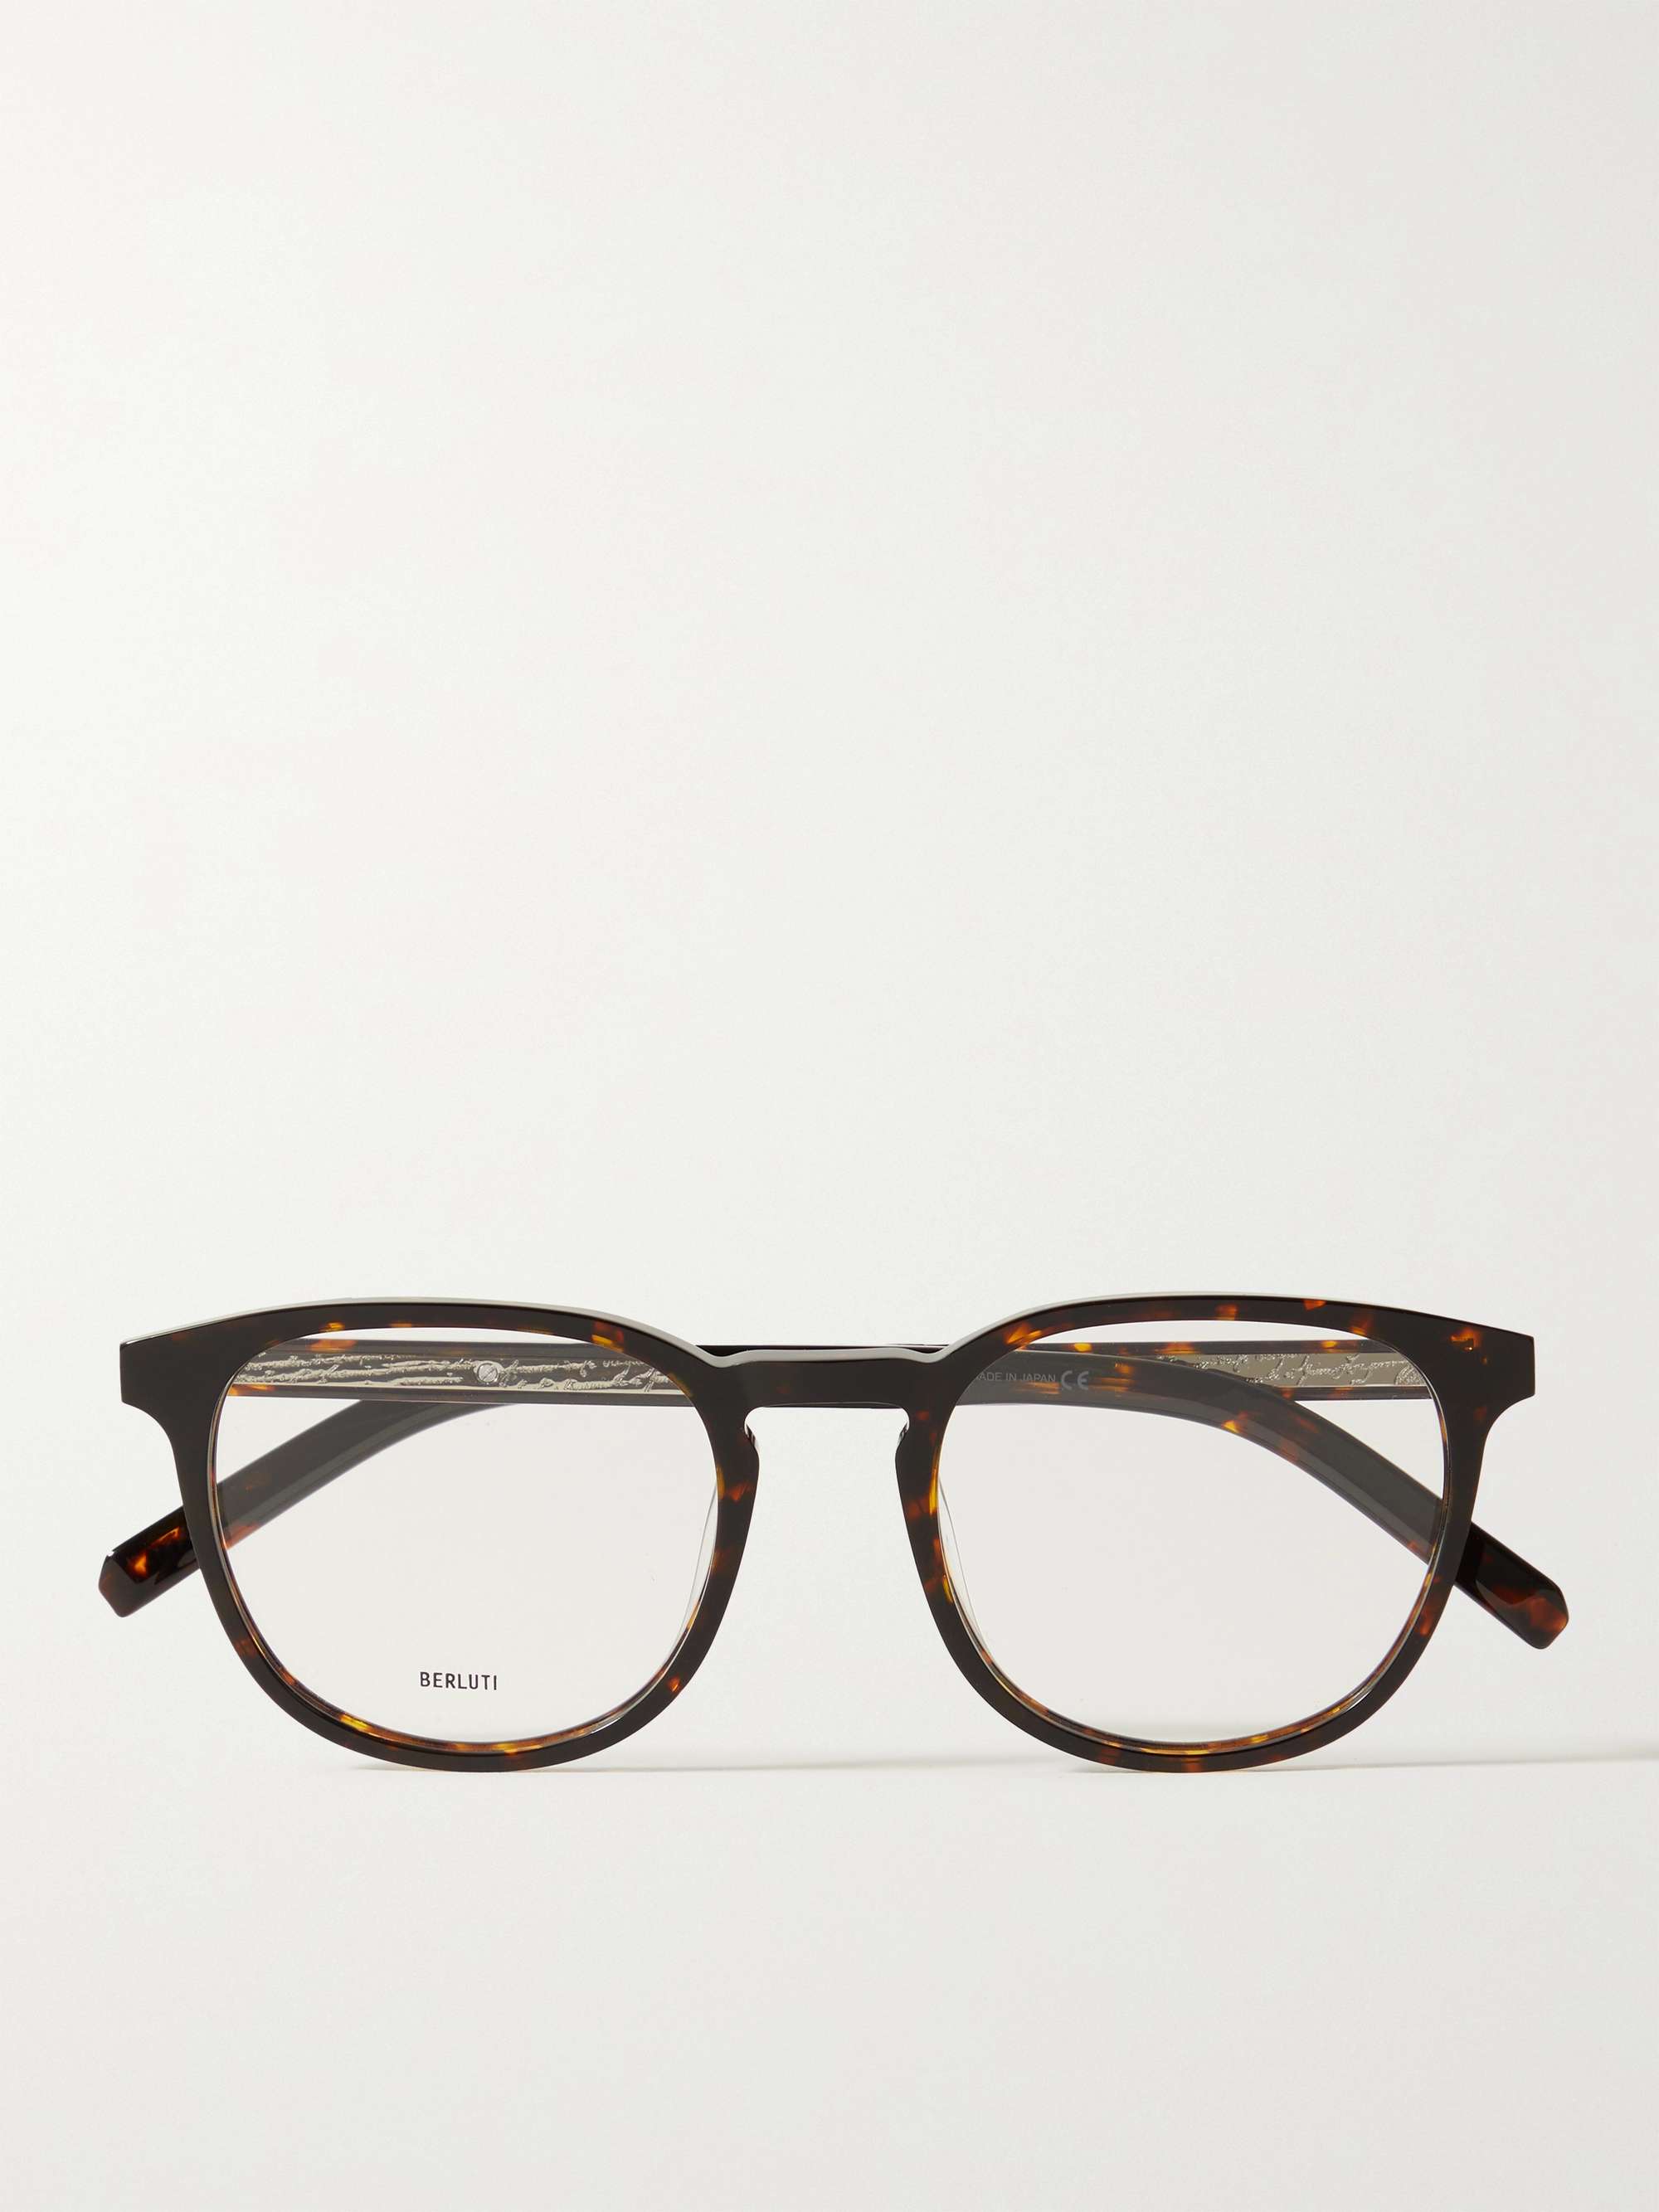 BERLUTI Round-Frame Tortoiseshell Acetate Optical Glasses